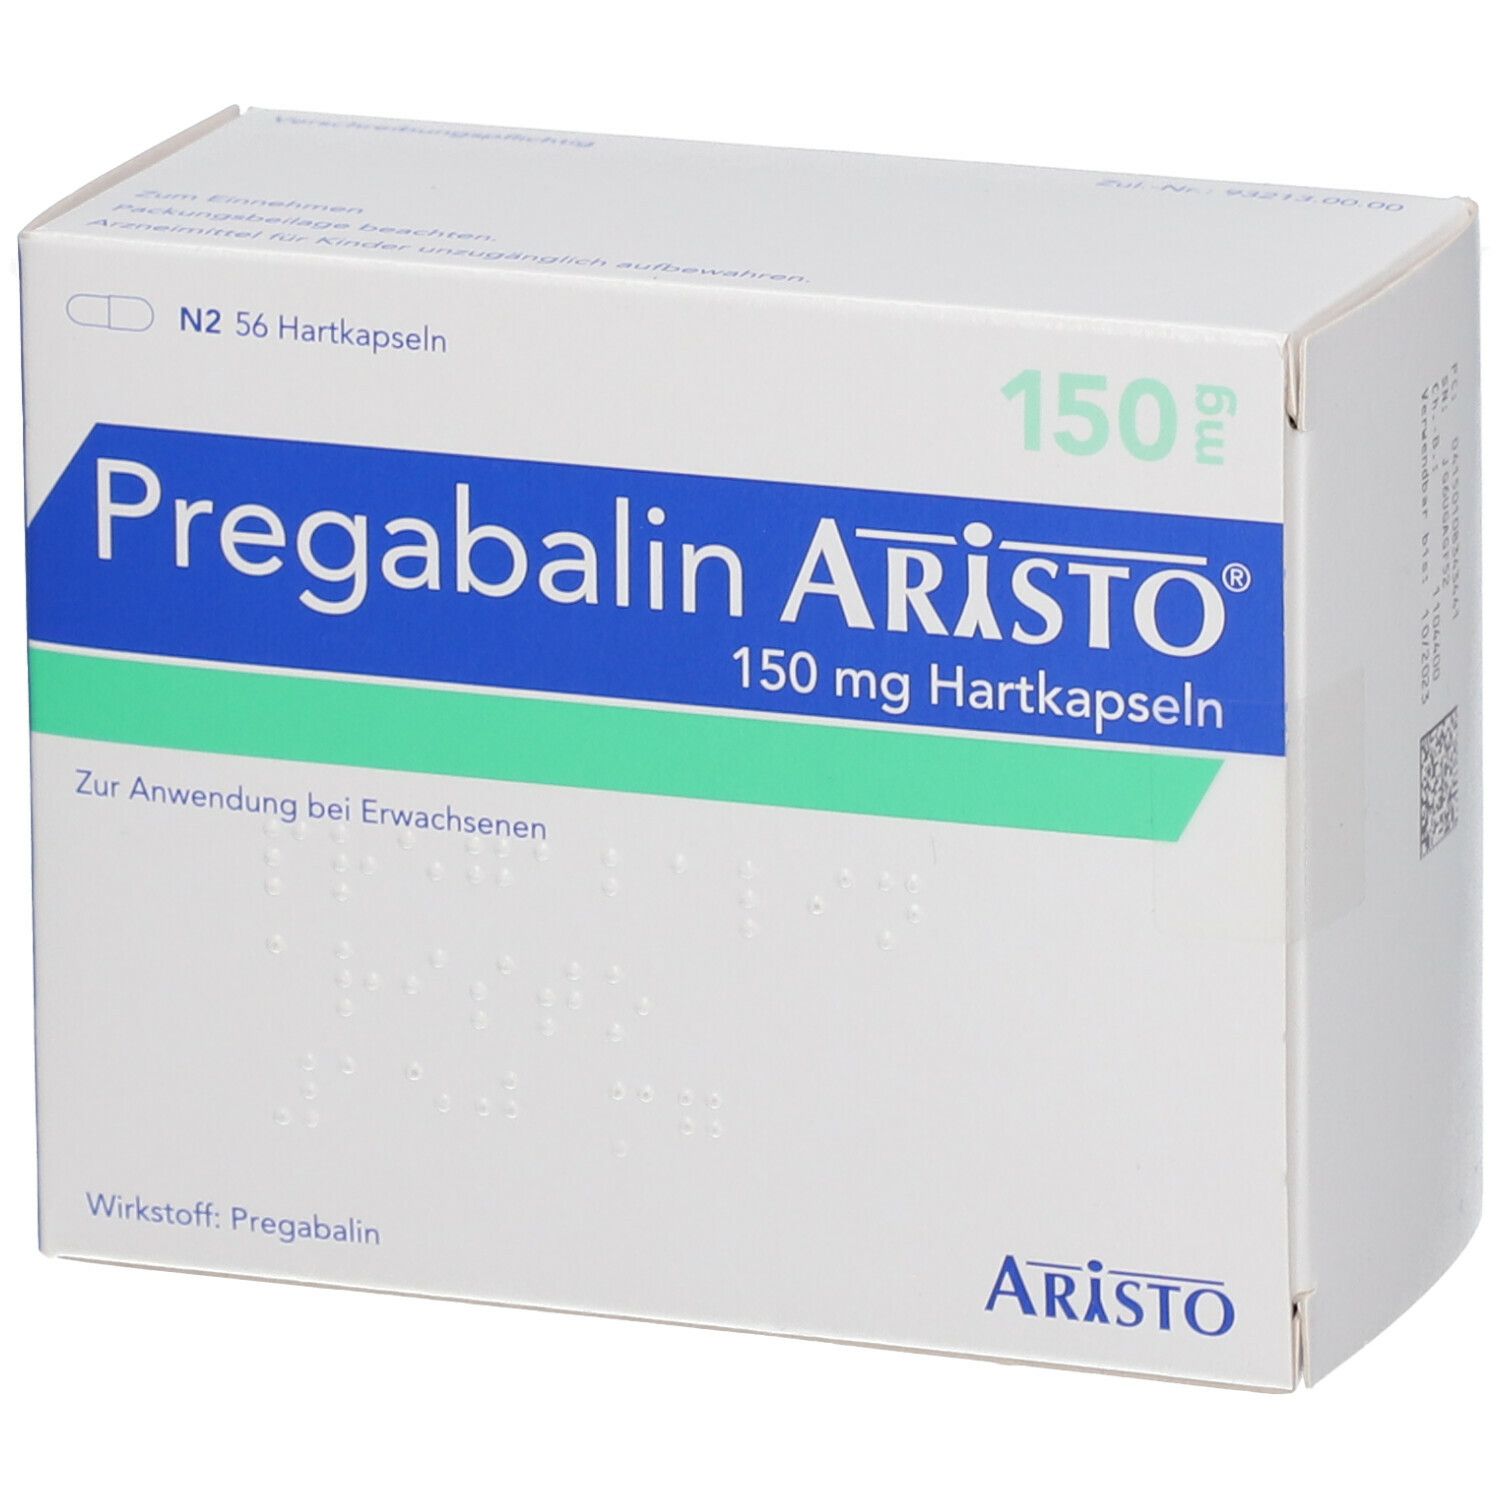 Pregabalin Aristo® 150 mg